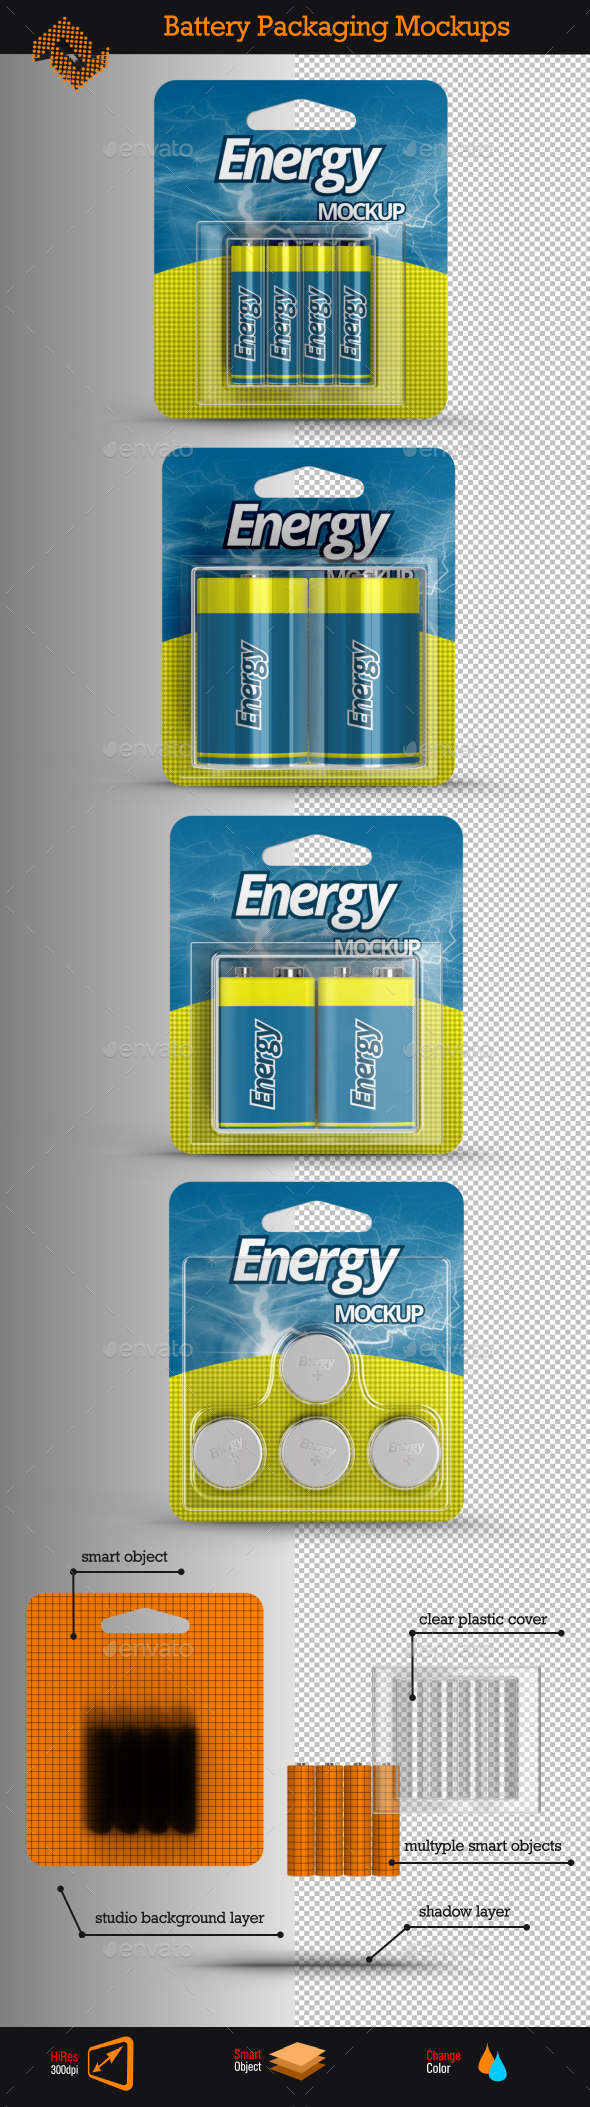 4 Battery Packaging Mockups